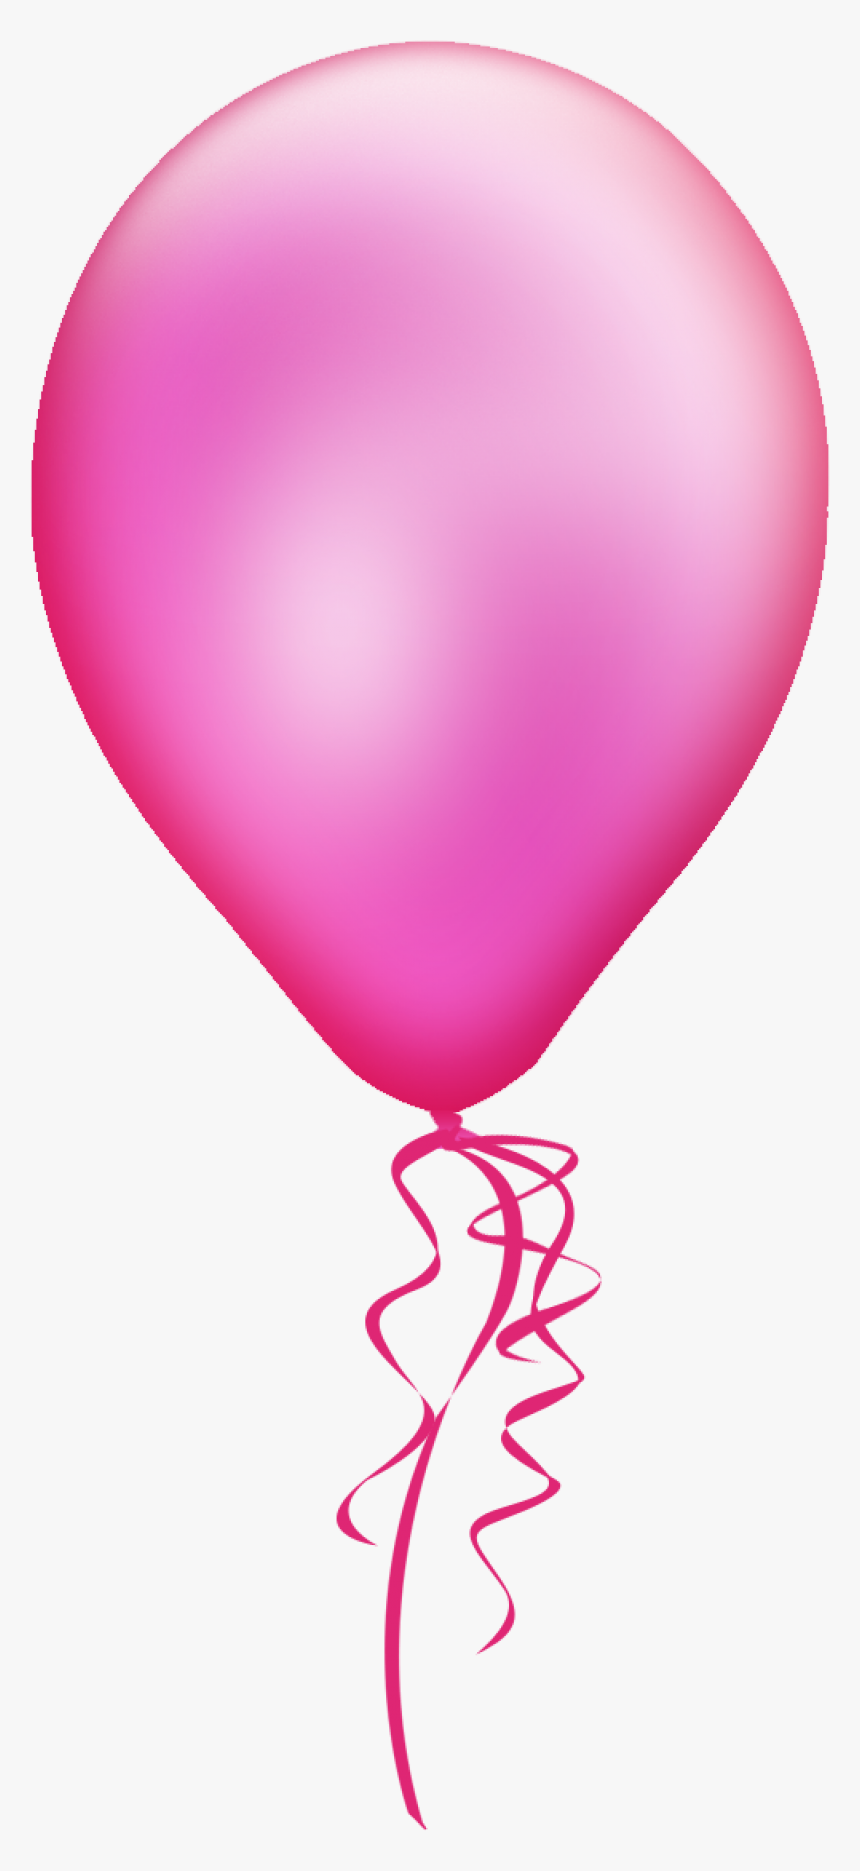 Картинка шар на прозрачном фоне. Воздушный шарик. Розовые шарики воздушные. Воздушные шарики на прозрачном фоне. Шар розовый.